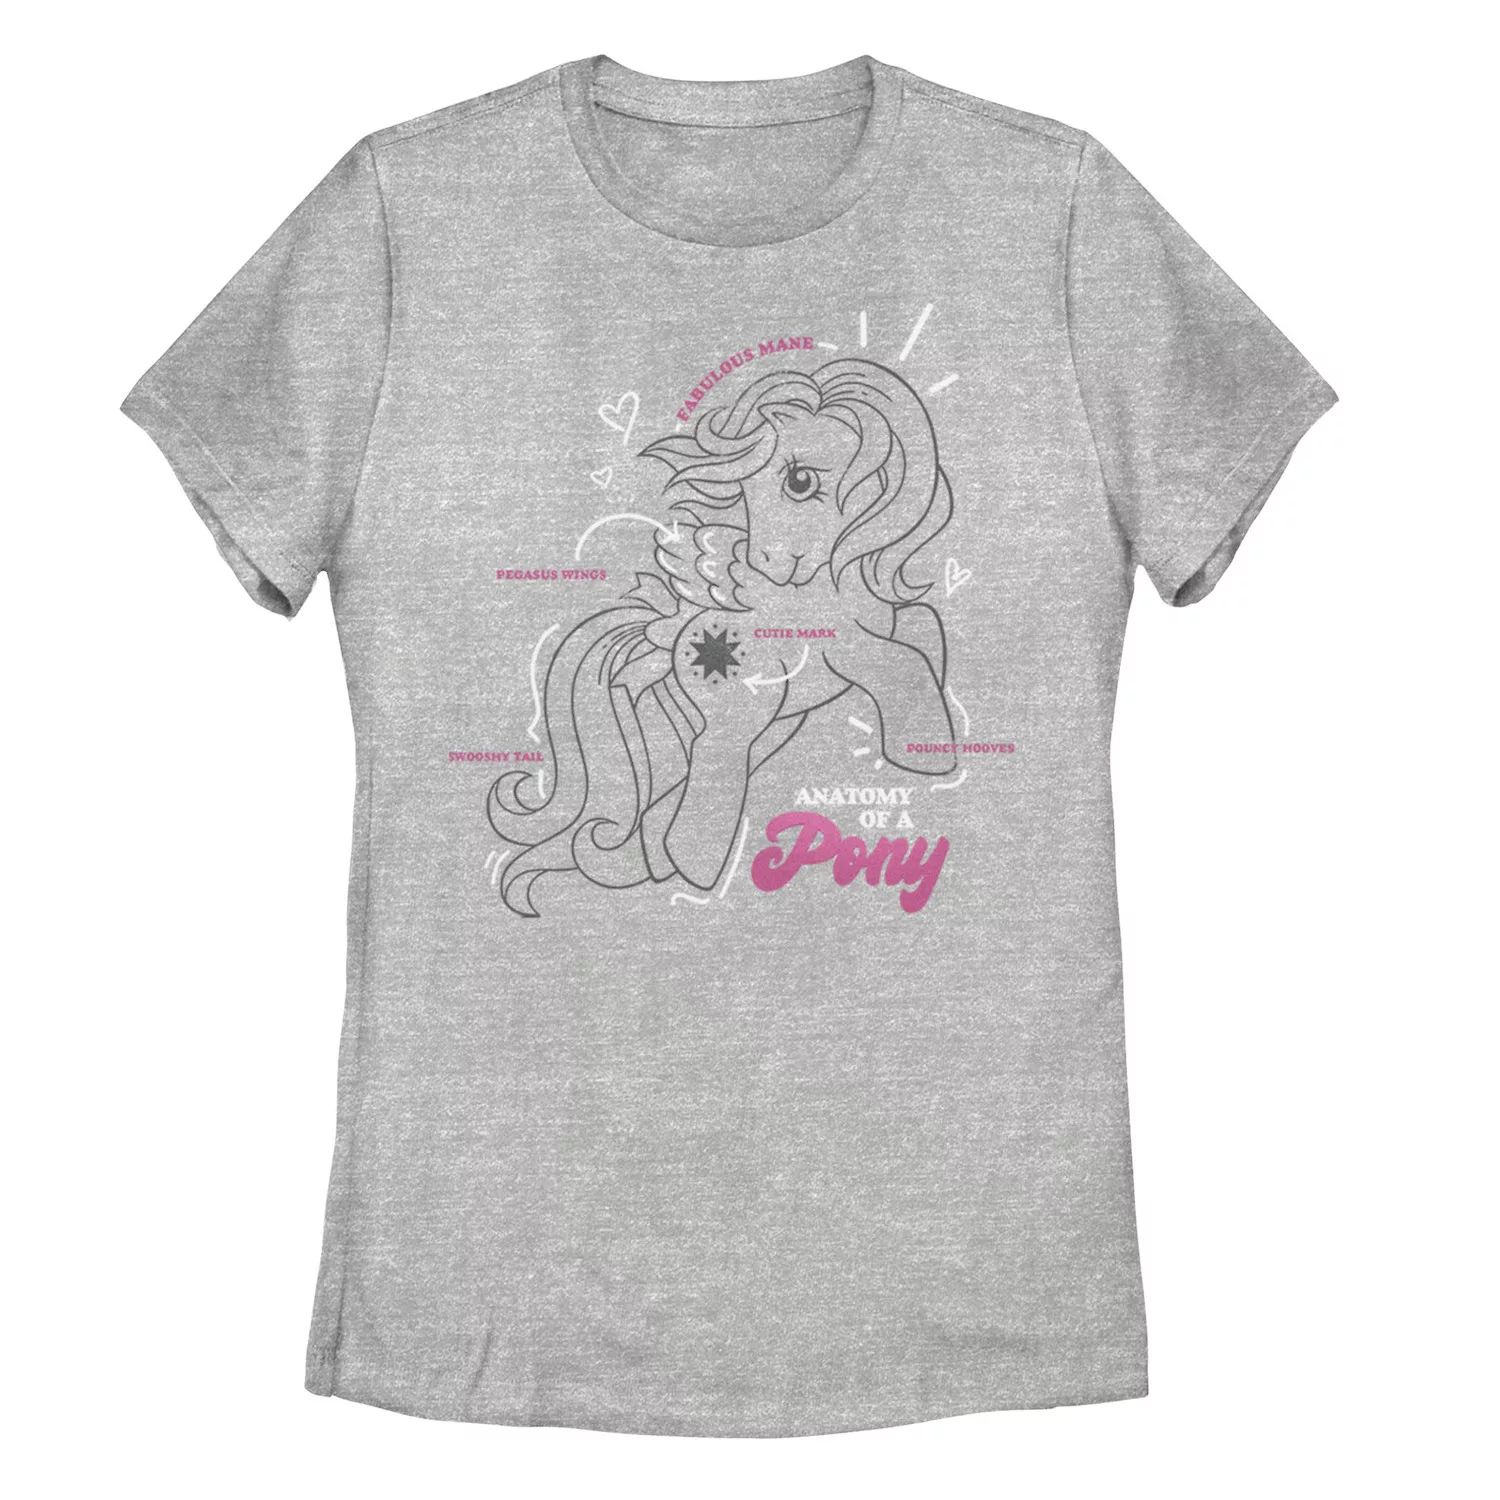 Анатомия футболки с рисунком пони My Little Pony для юниоров My Little Pony анатомия футболки с рисунком пони my little pony для юниоров my little pony